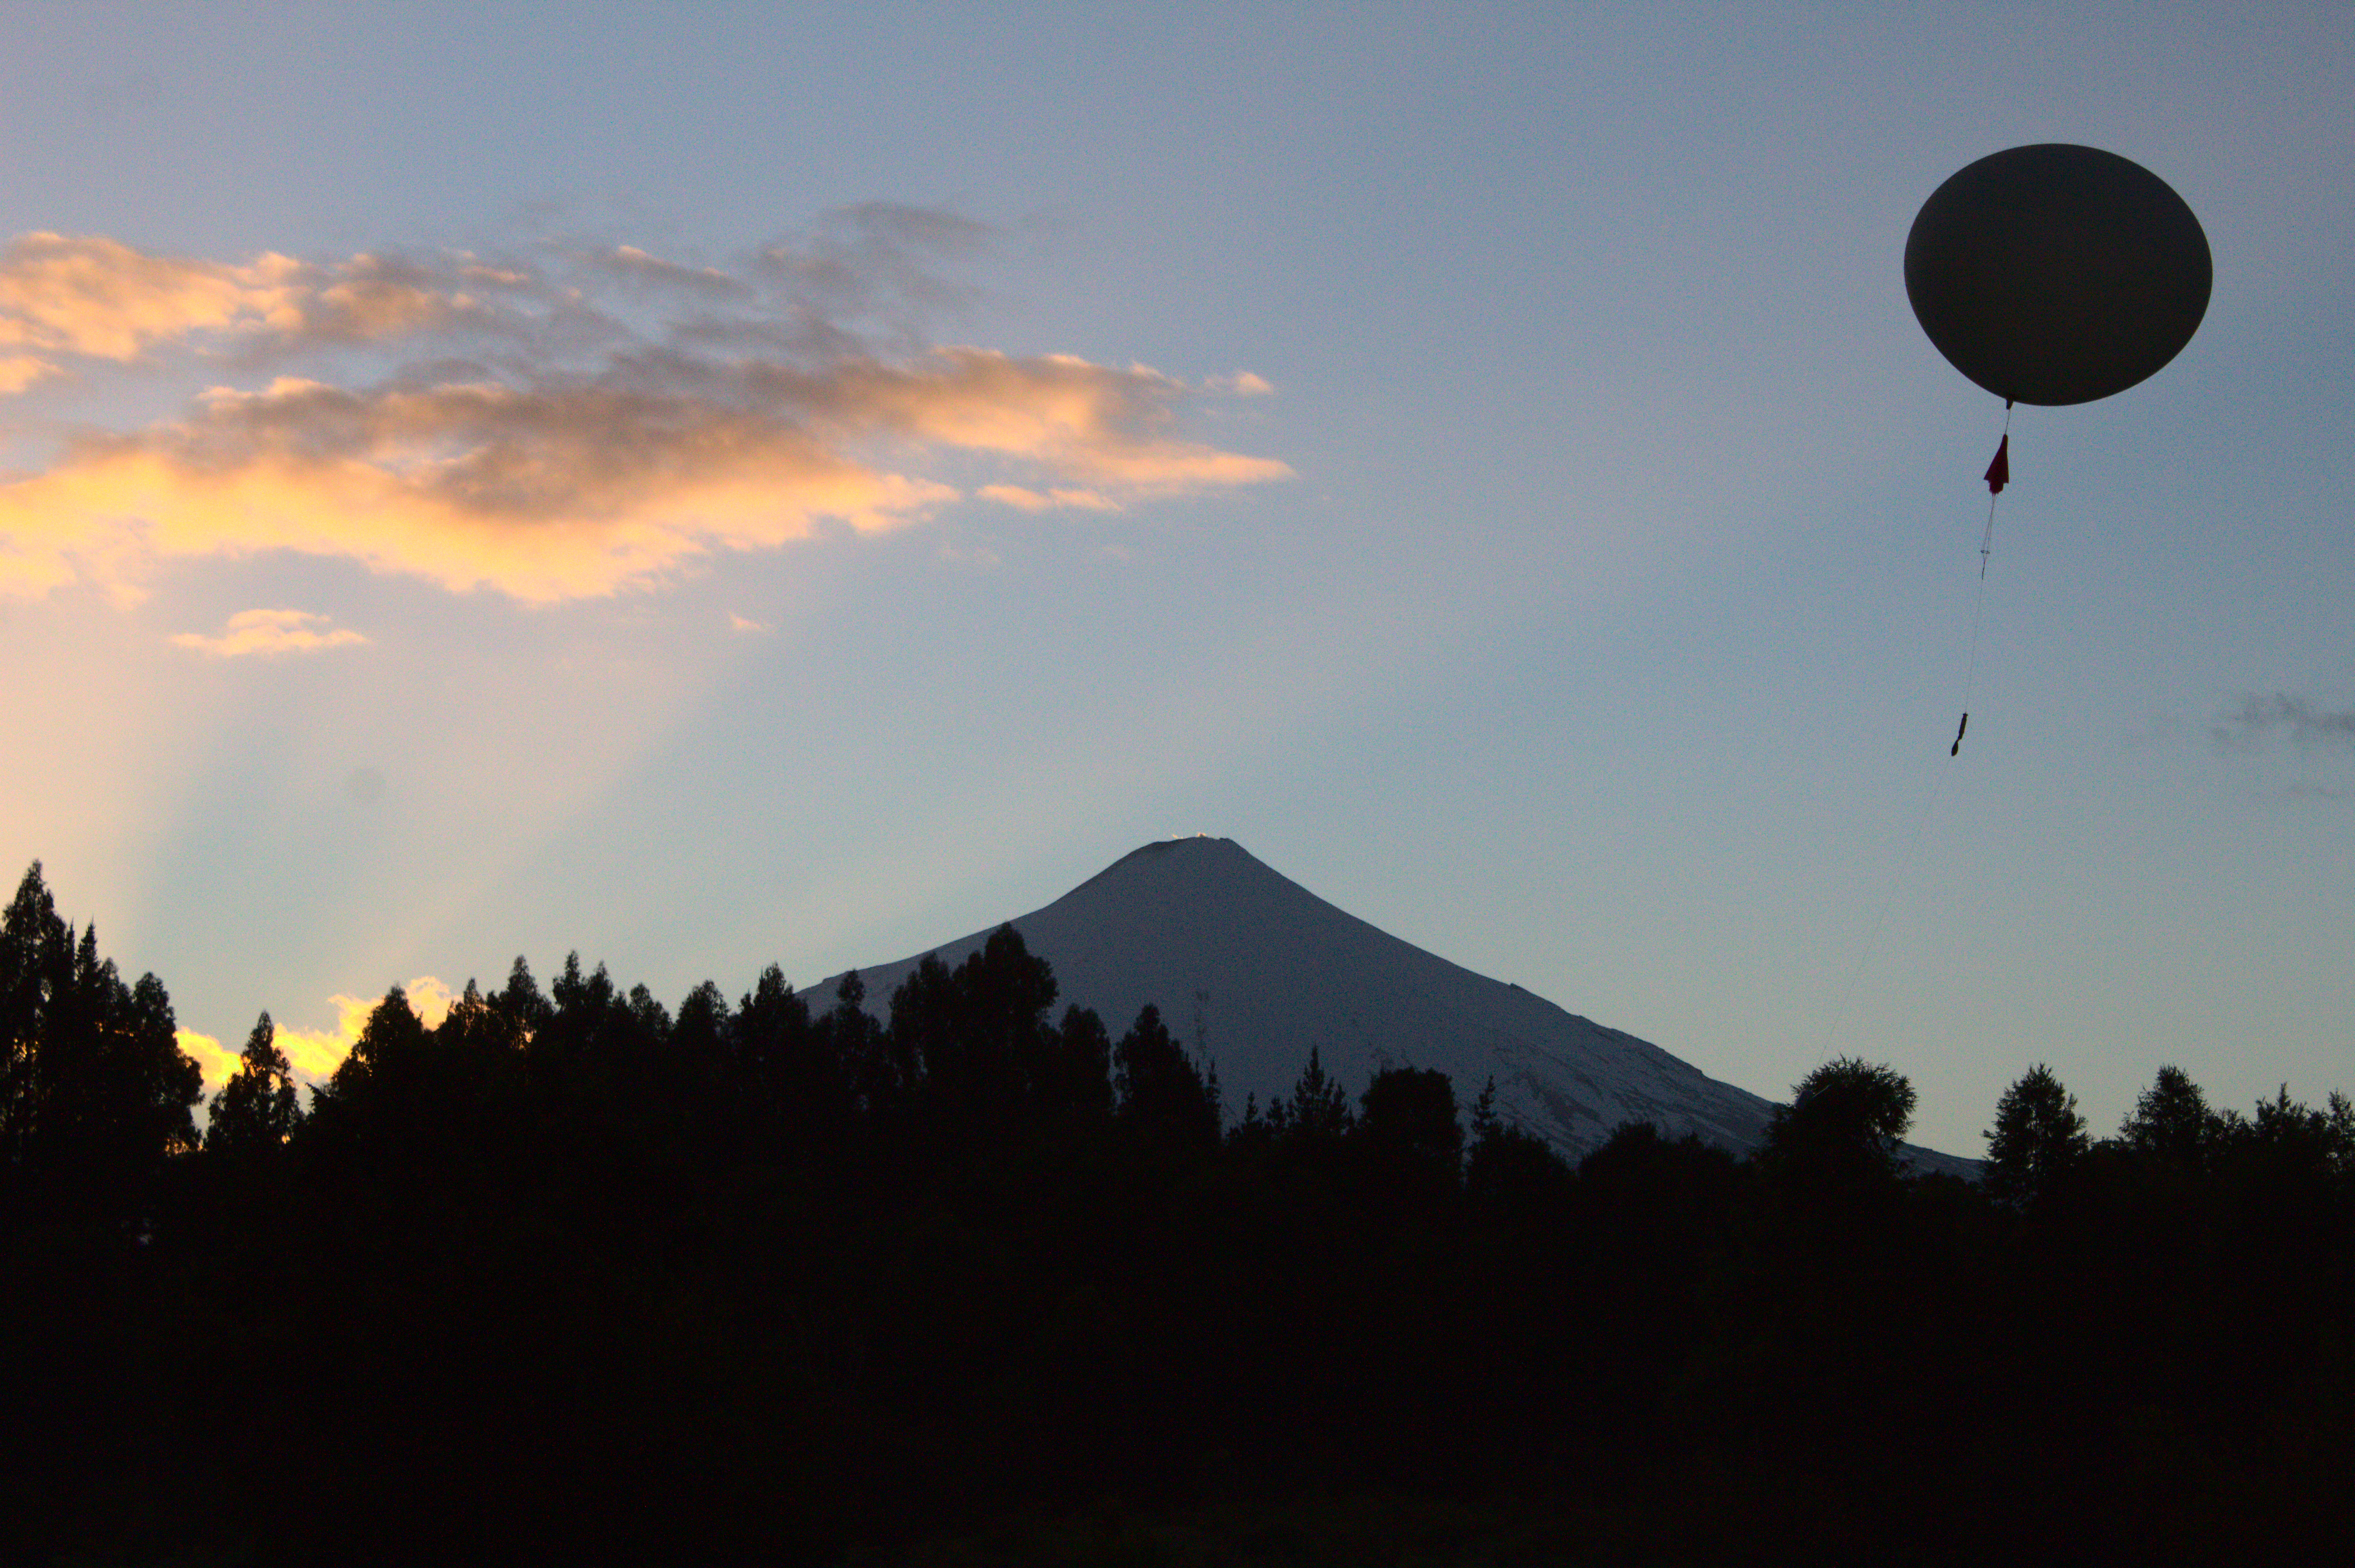 Morning balloon launch in Villarrica, Chile